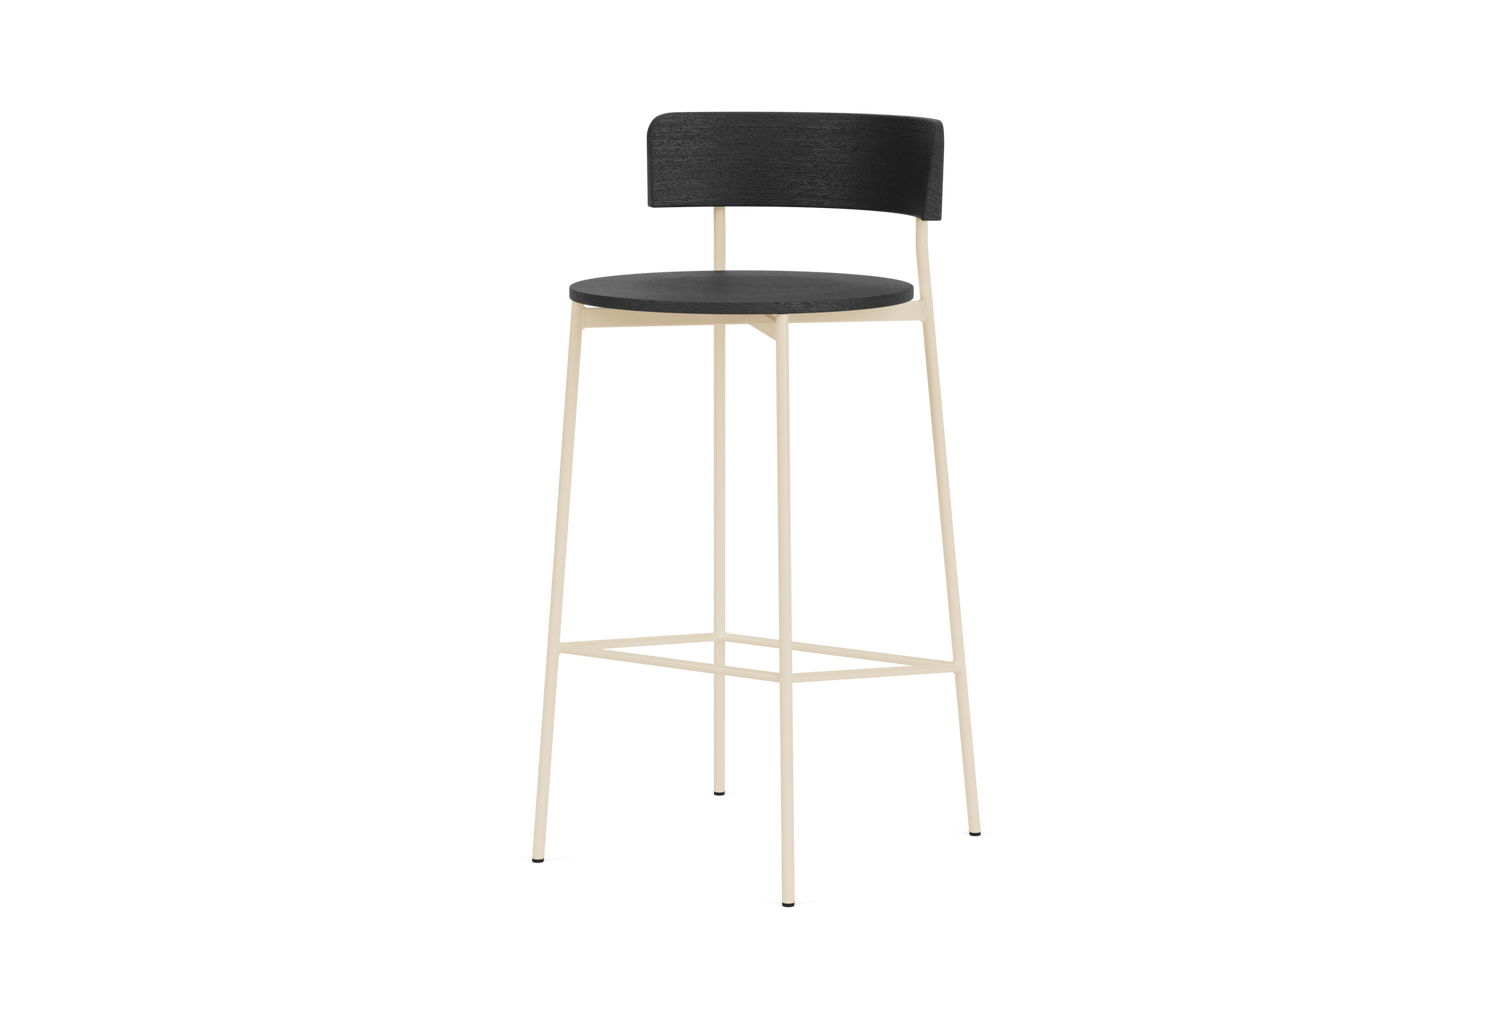 Friday bar stool - sand frame - black back (no upholstery)